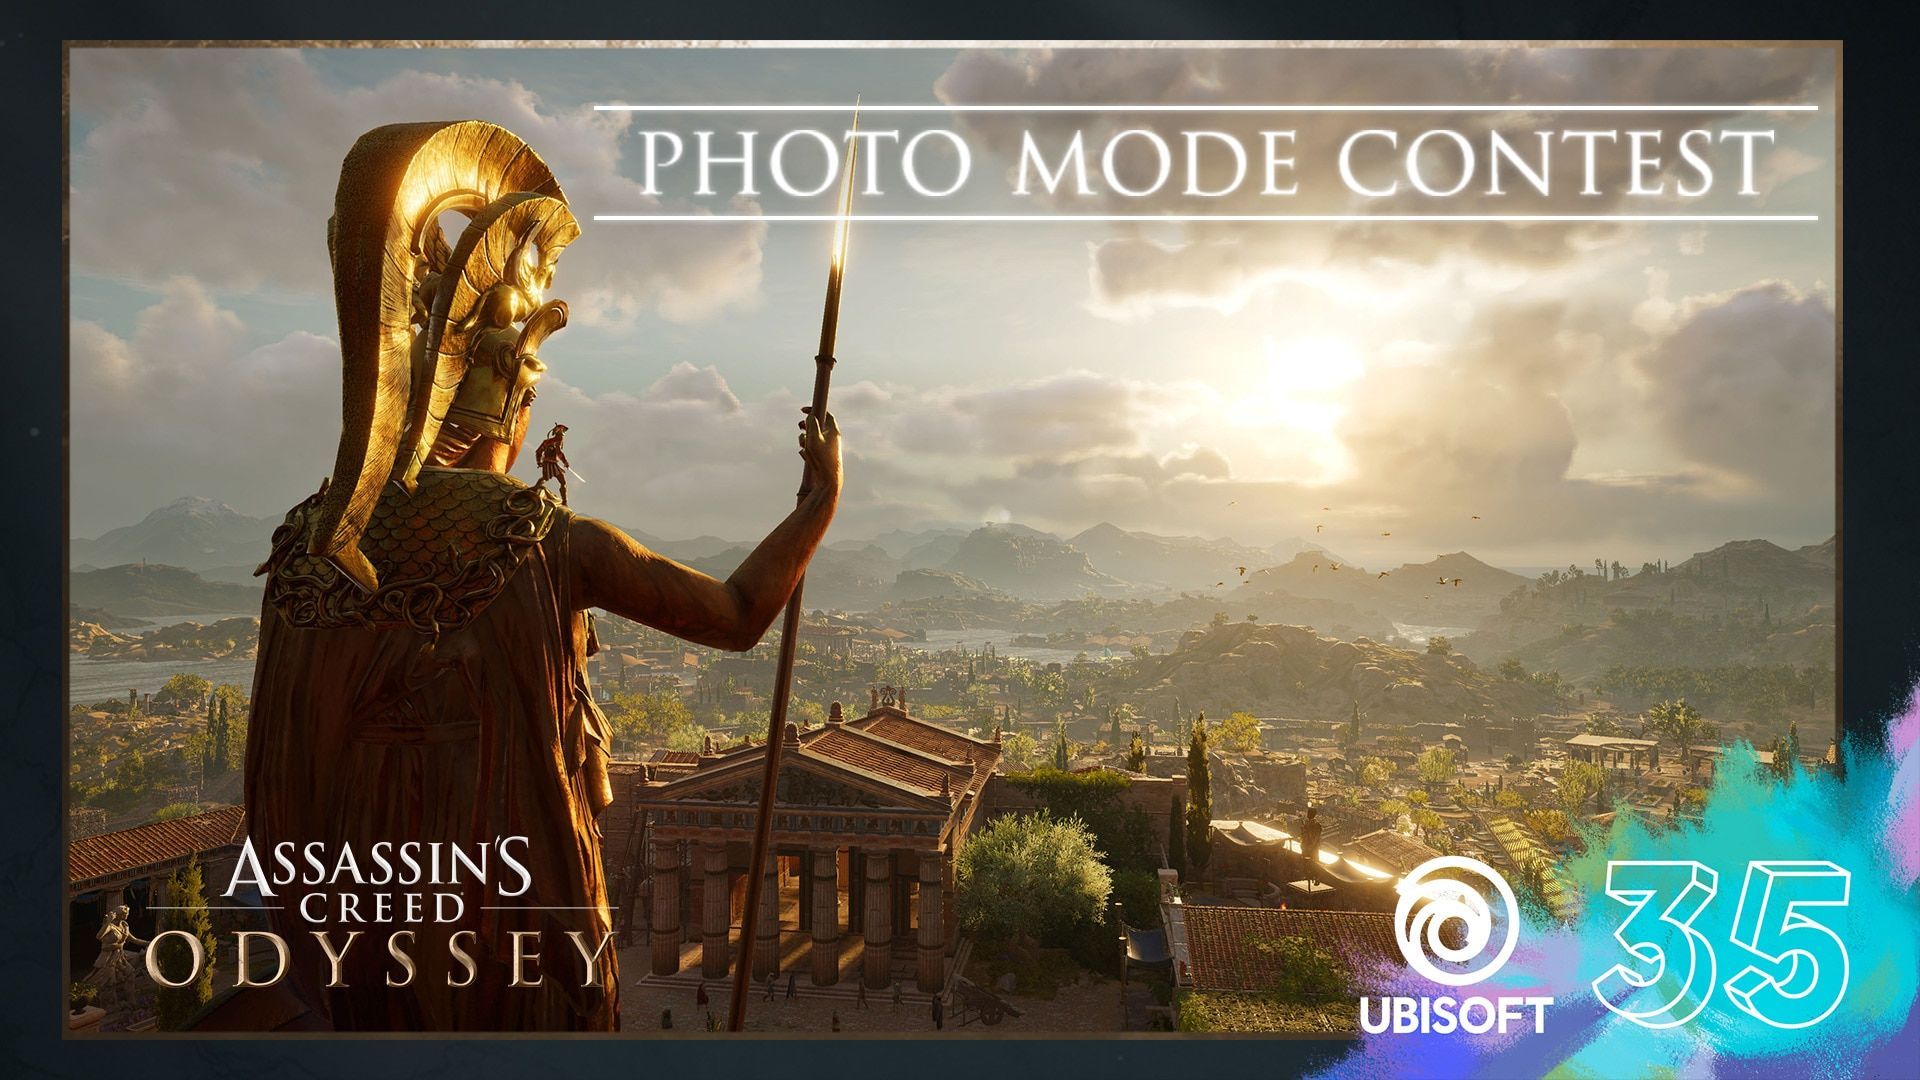 Assassin's Creed Odyssey - Concours de mode Photo